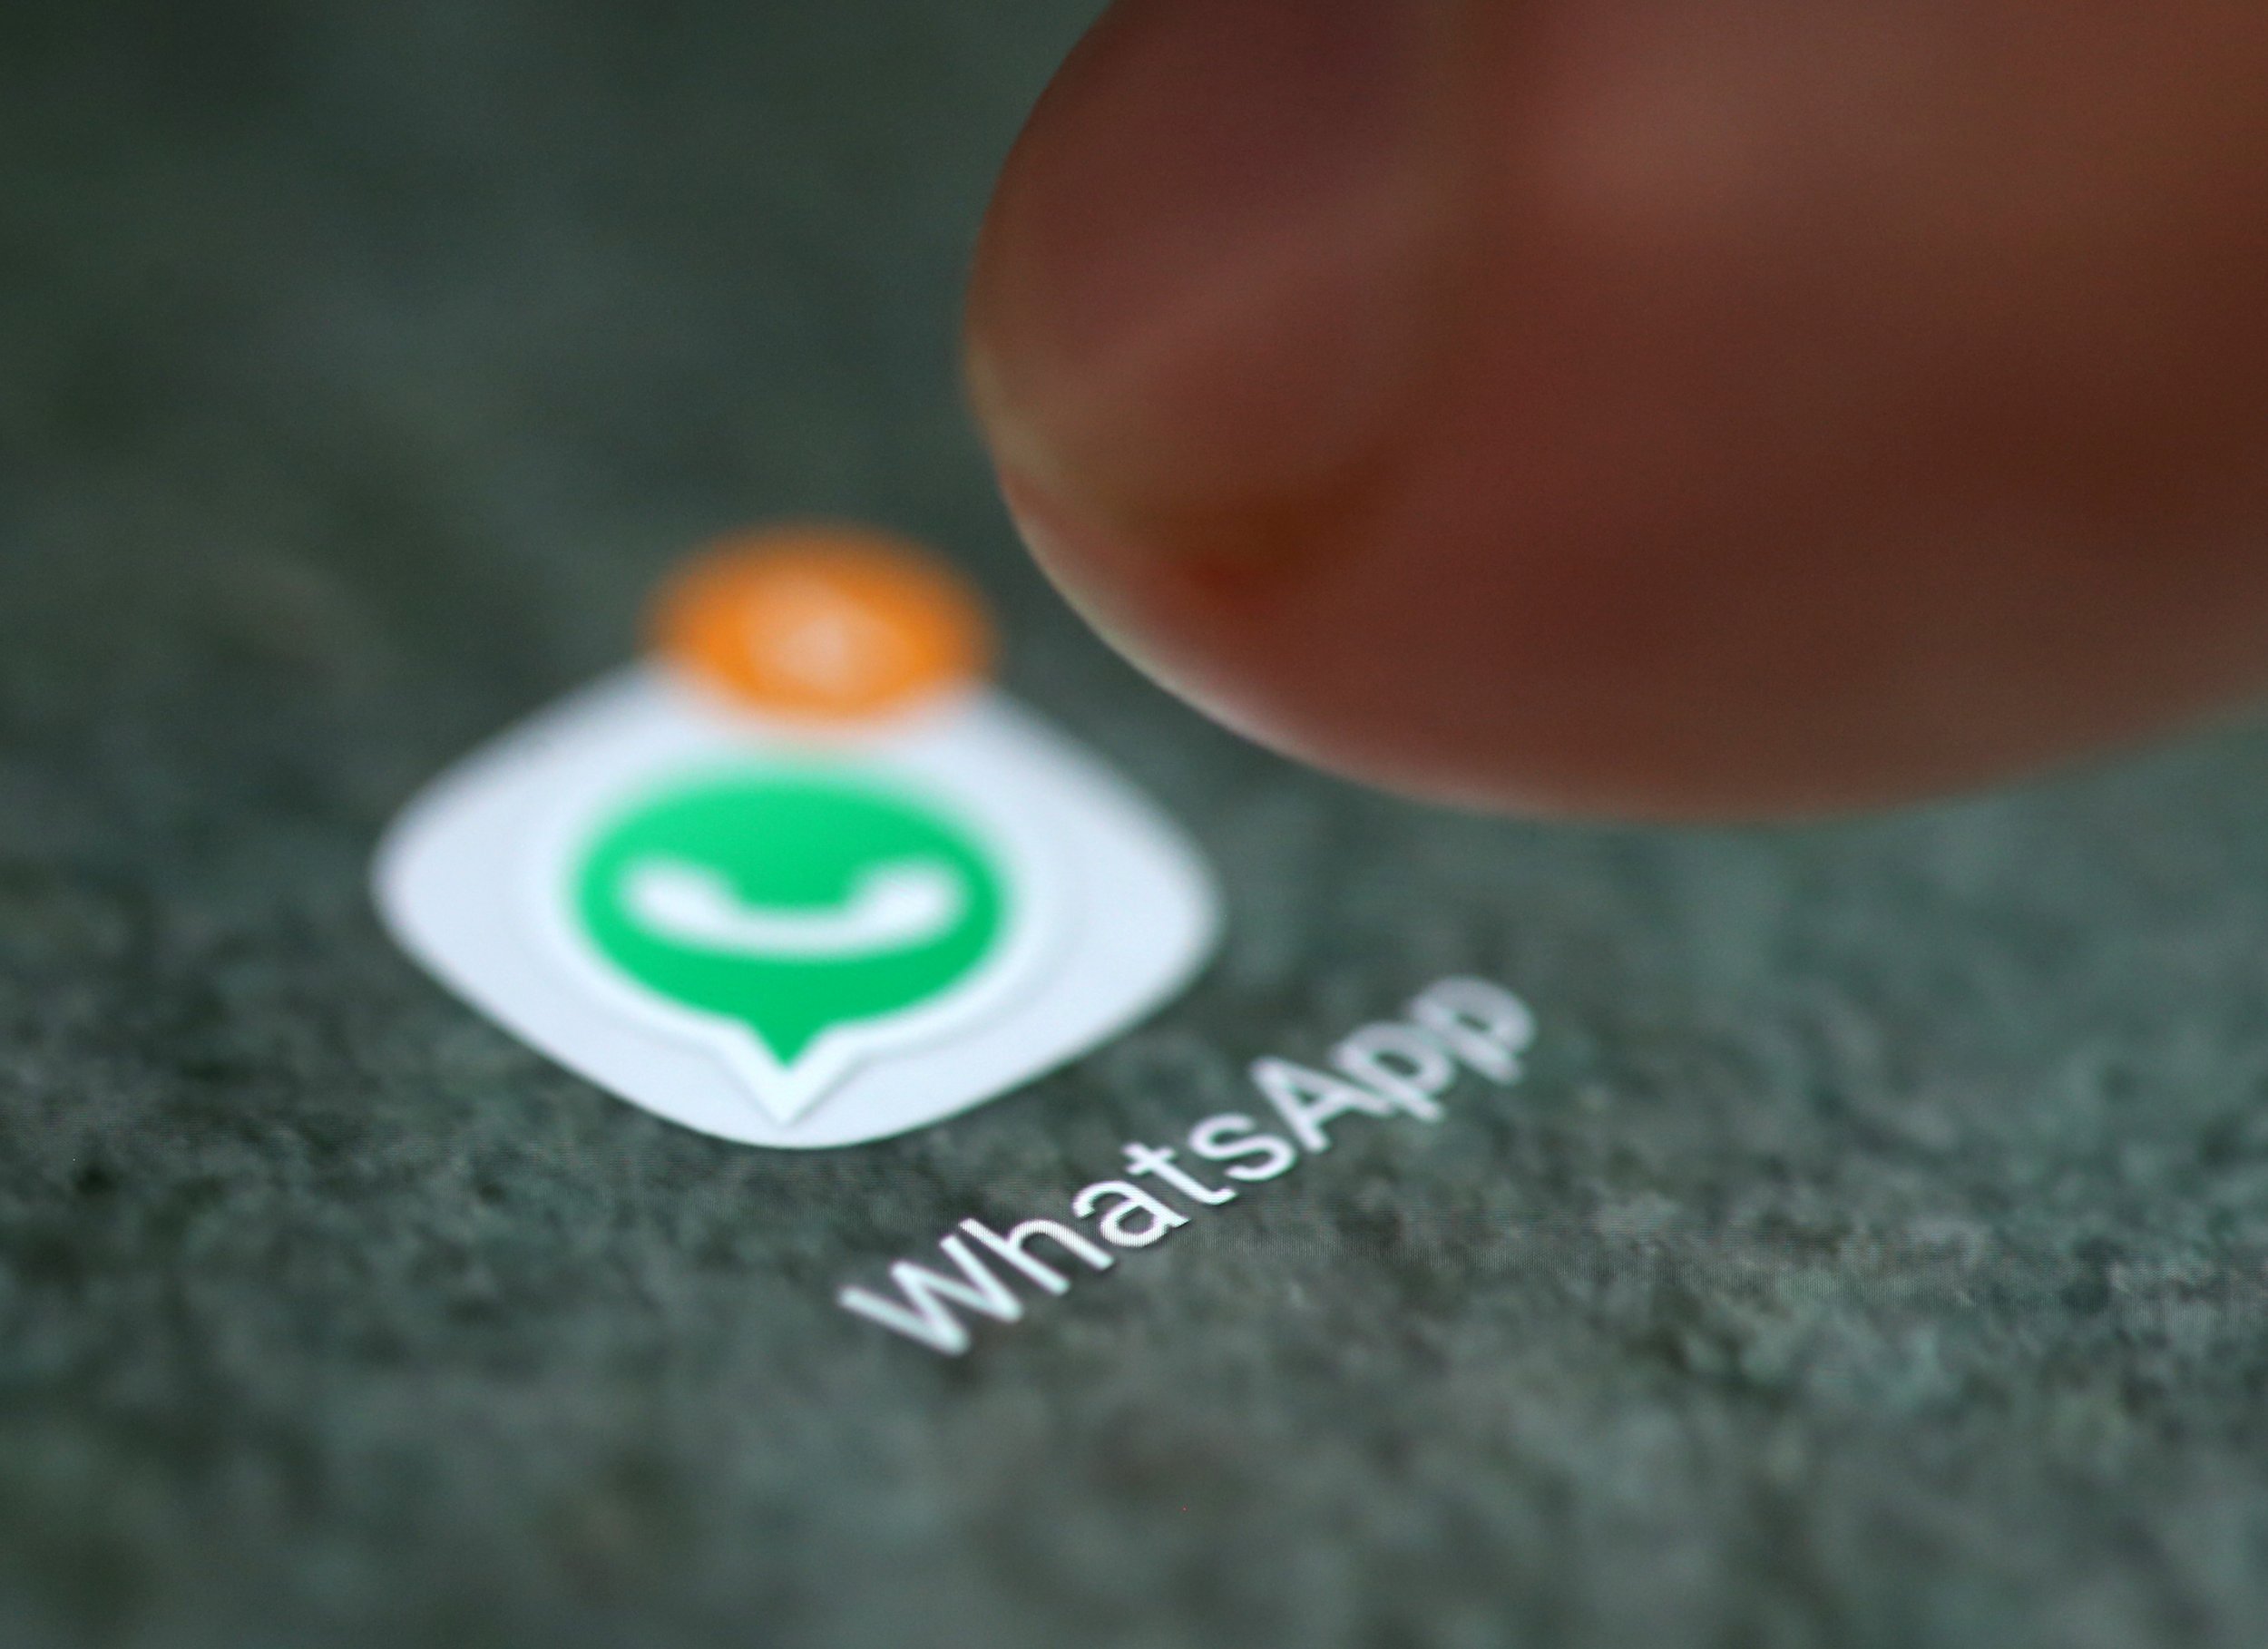 WhatsApp 'Text Bomb': Emoji Messages Crash Apps and Smartphones in Seconds